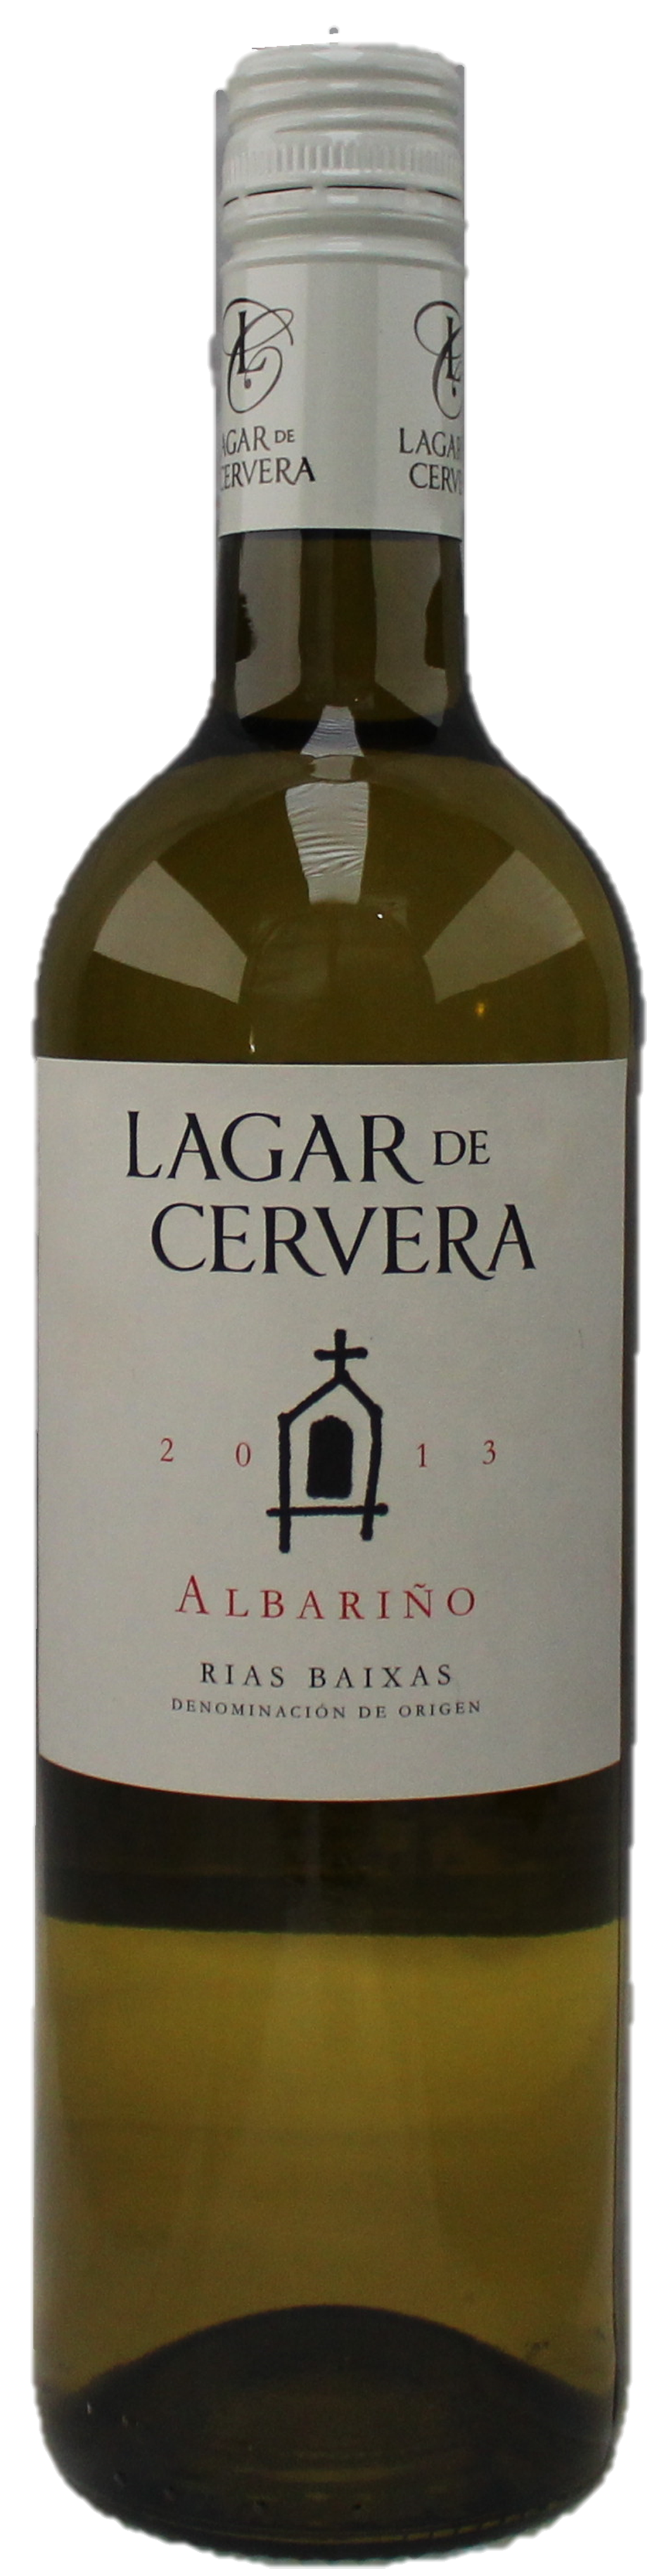 Bottle shot of 2013 Albariño